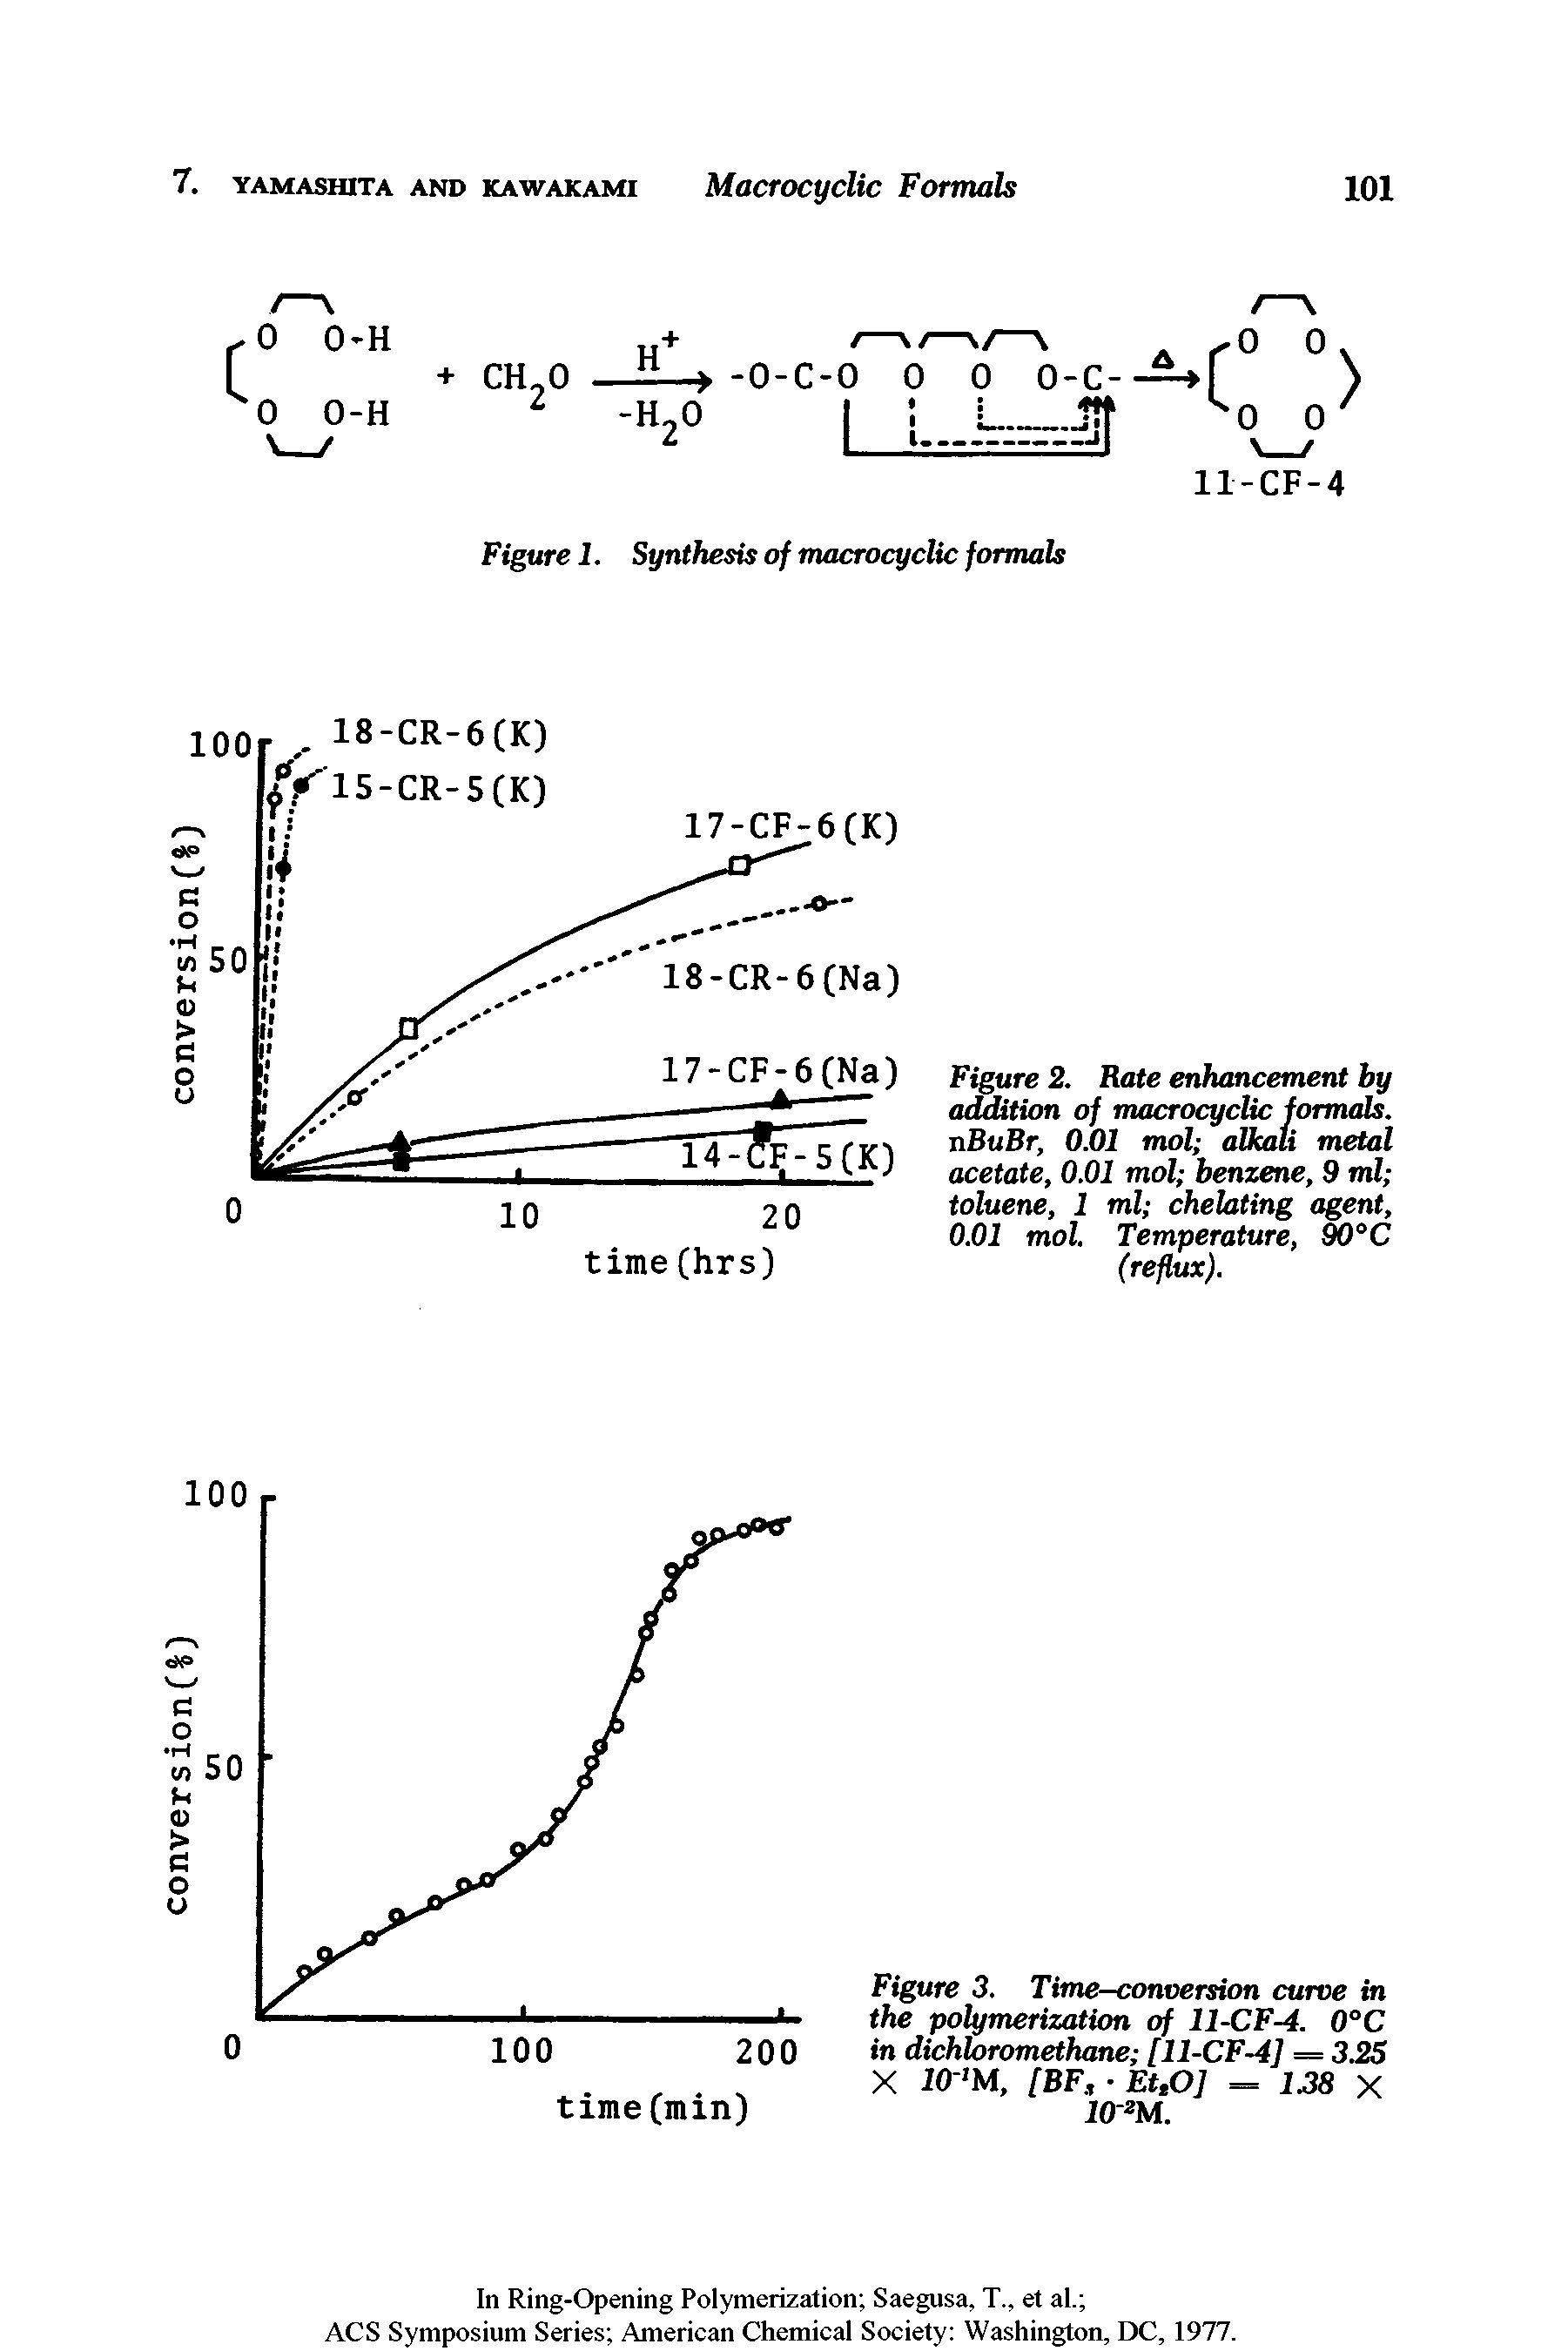 Figure 2. Rate enhancement by addition of macrocyclic formals. nBuBr, 0.01 mol alkali metal acetate, 0.01 mol benzene, 9 ml toluene, 1 ml chelating agent, 0.01 mol. Temperature, OO C (reflux).